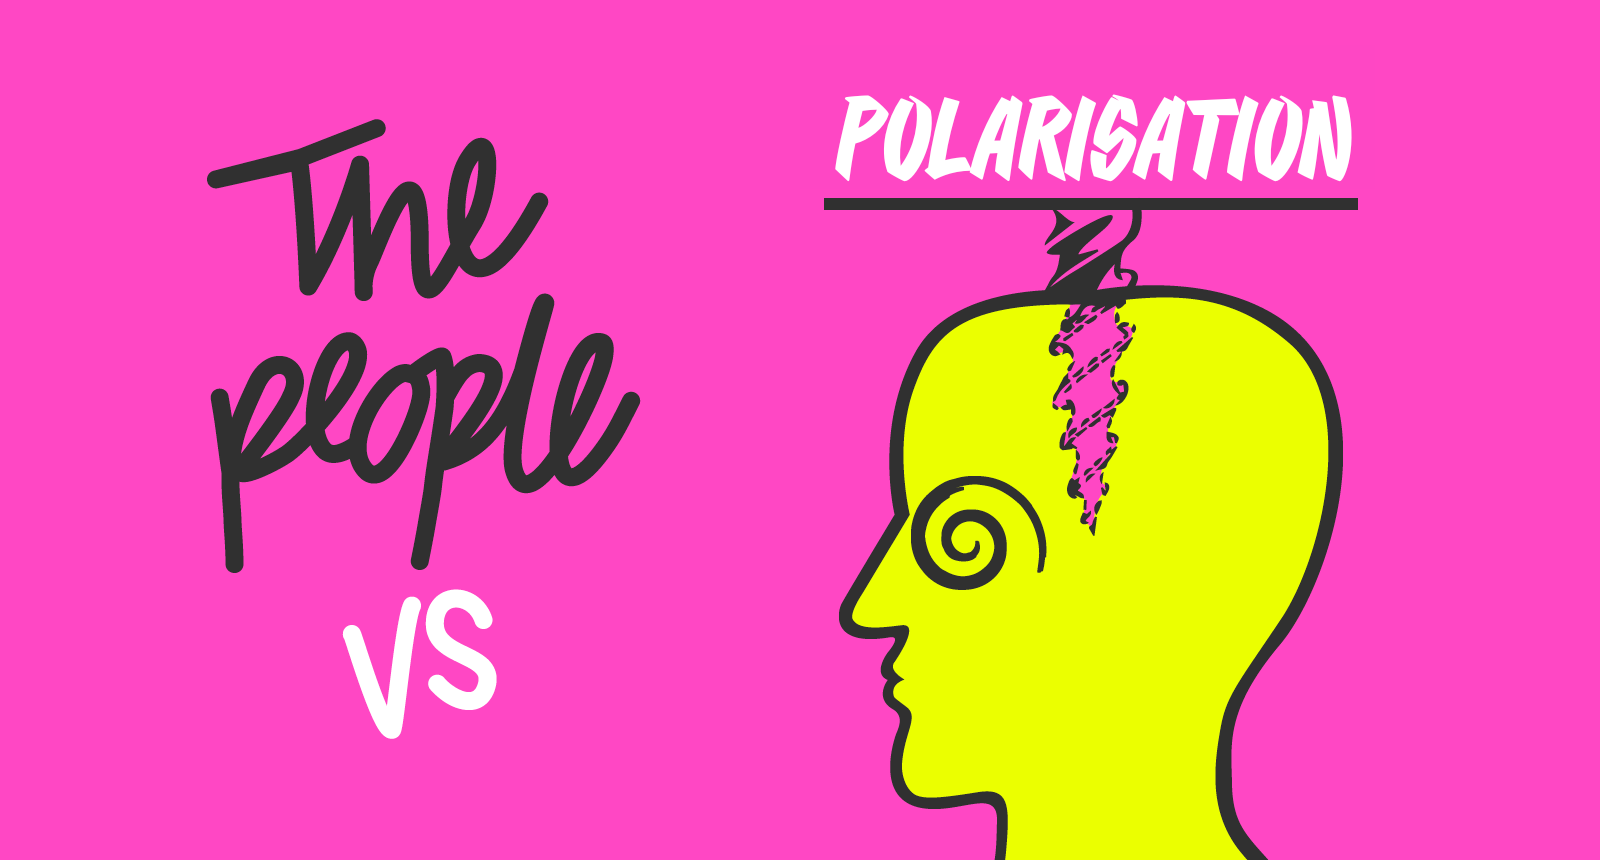 The People vs Polarisation